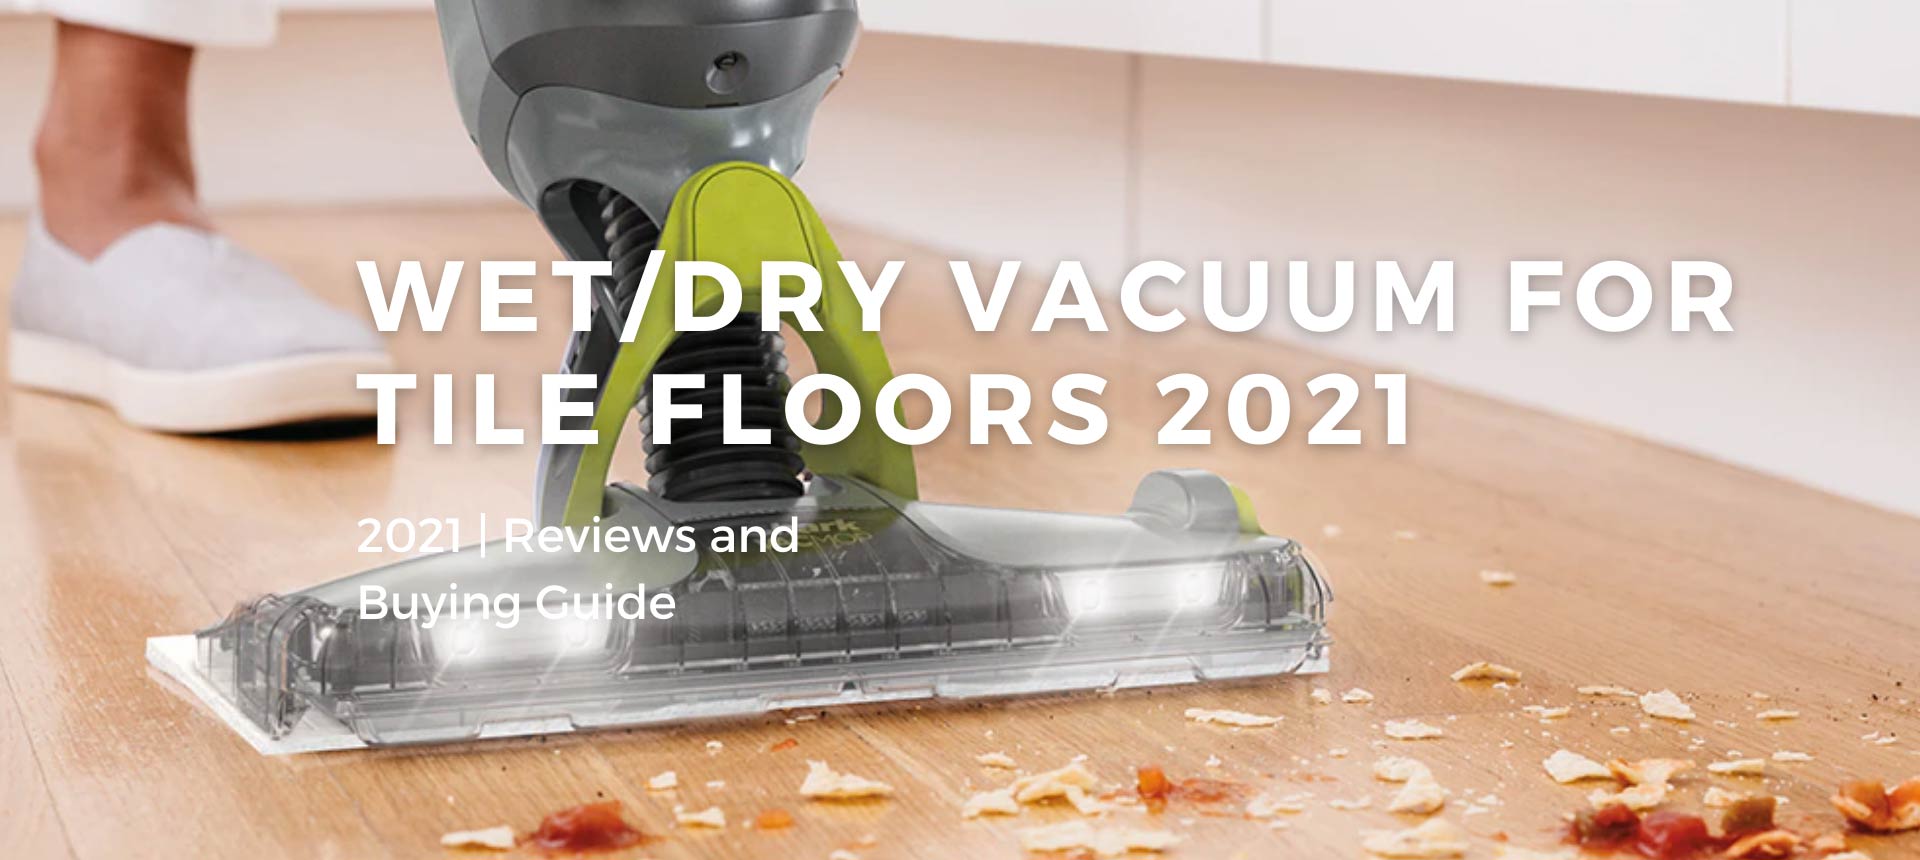 Best Vacuums For Tile Floors 2021